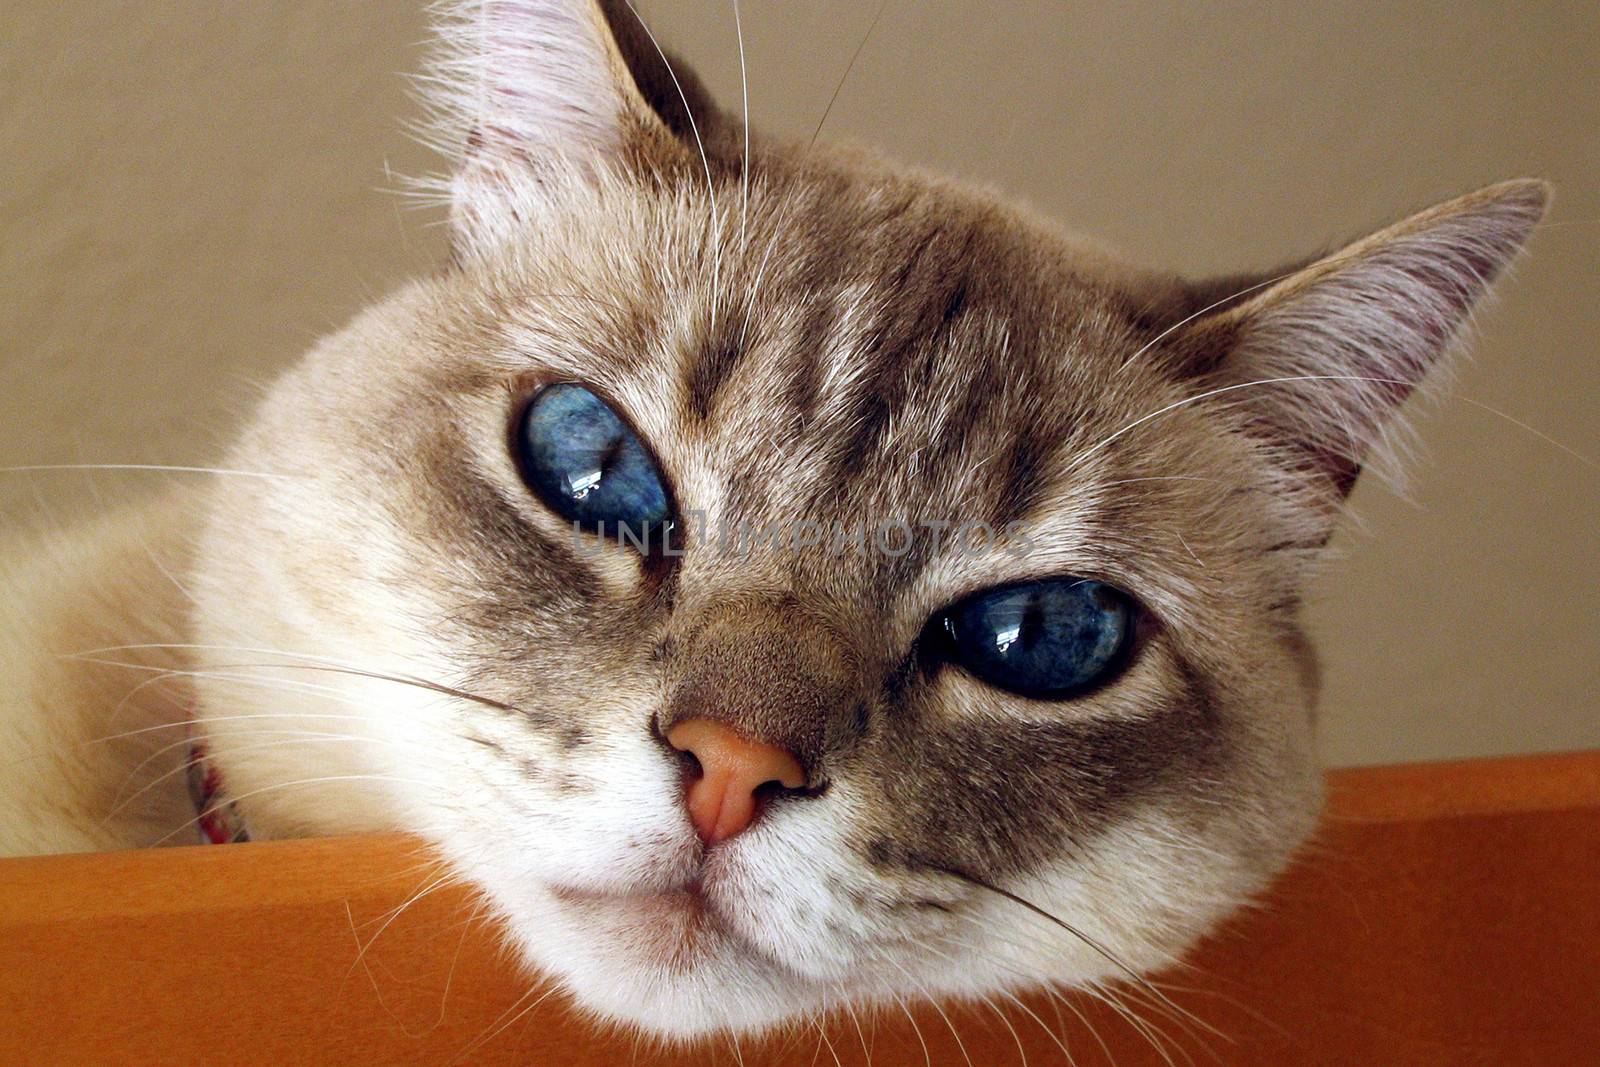 Cat with blue eyes by CelsoDiniz